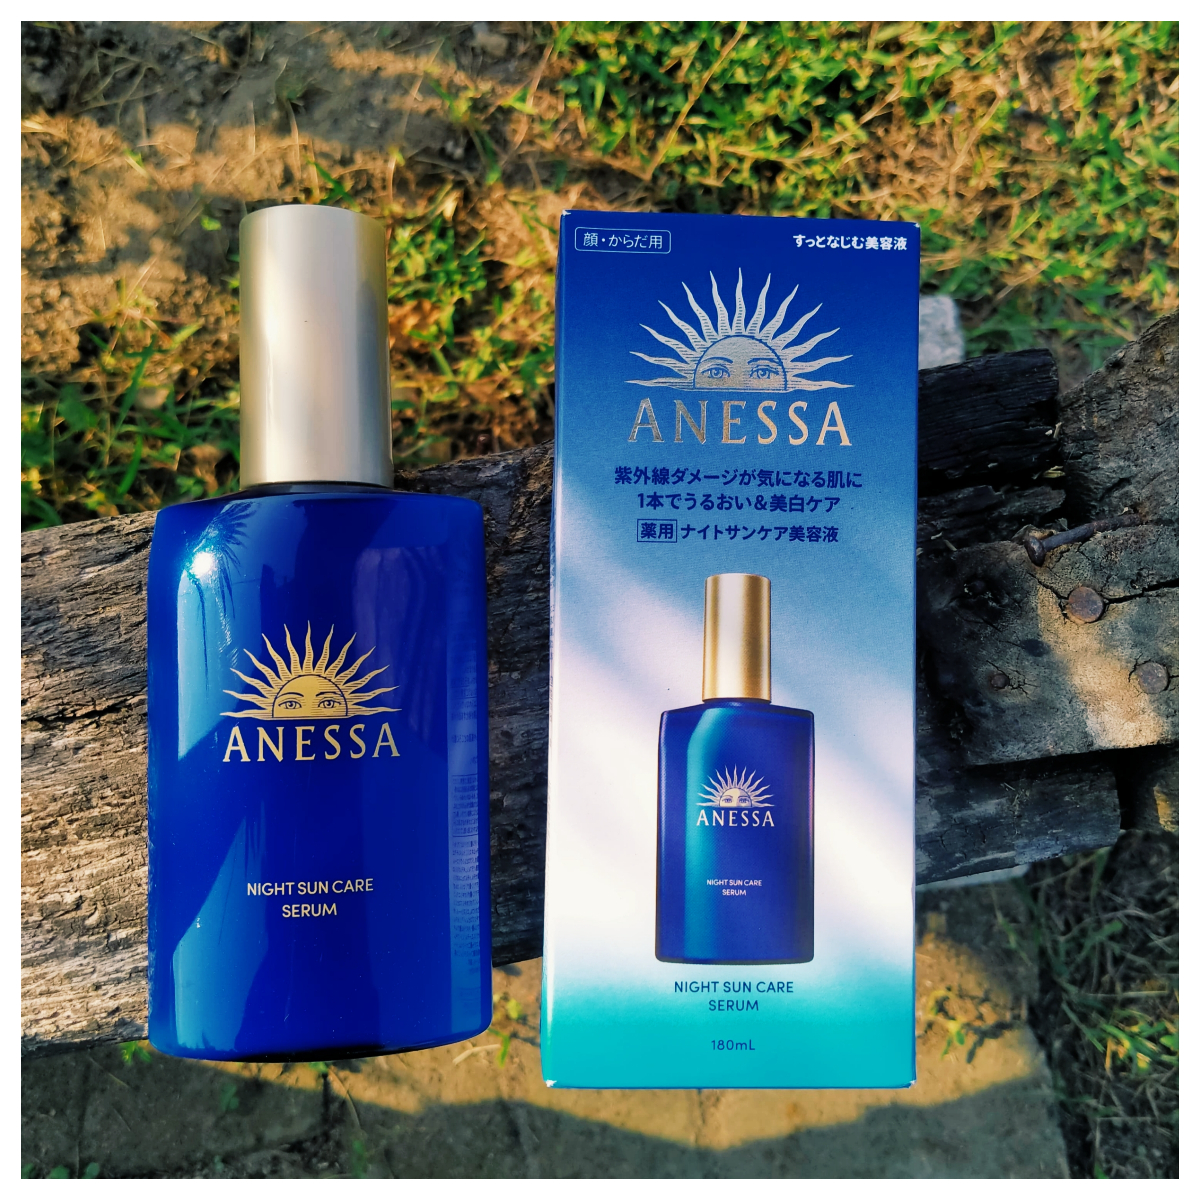 ANESSA Night Sun Care Serum-